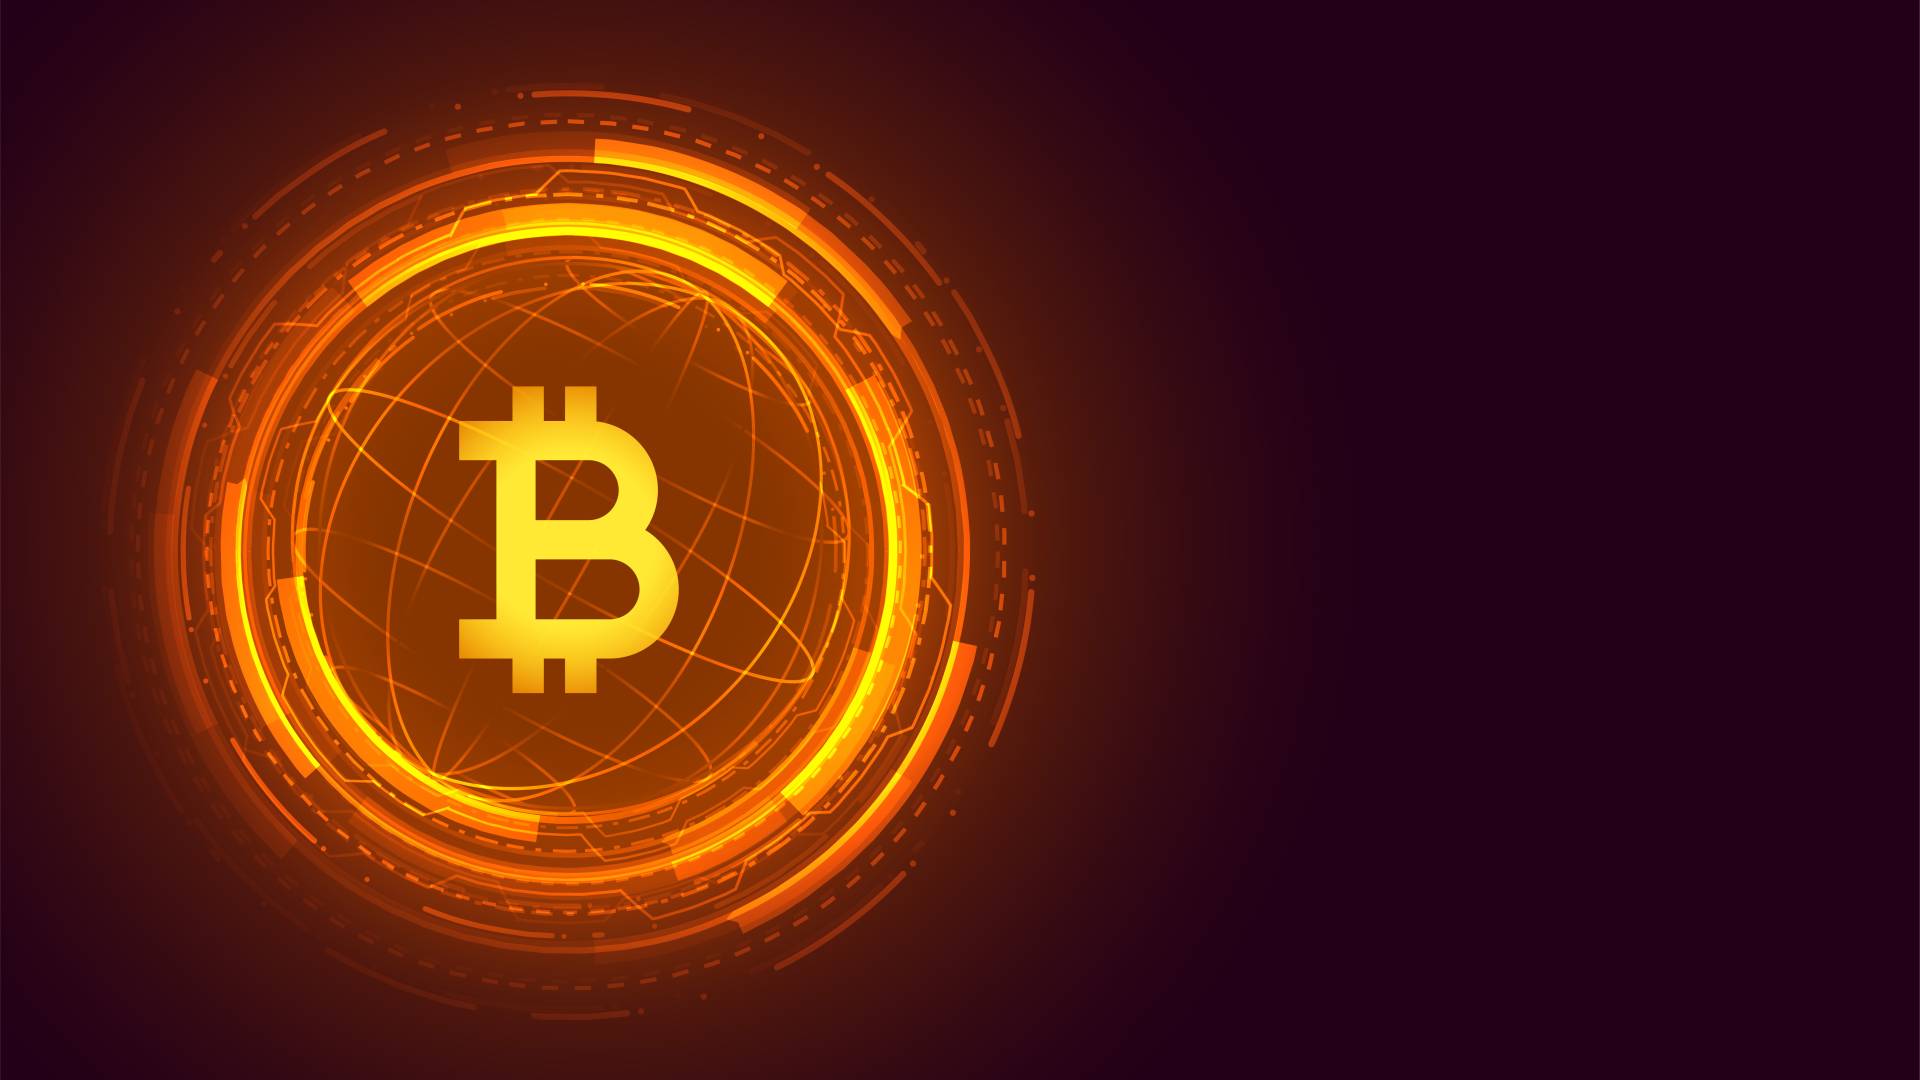 Bitcoin blockchain and quantum computer